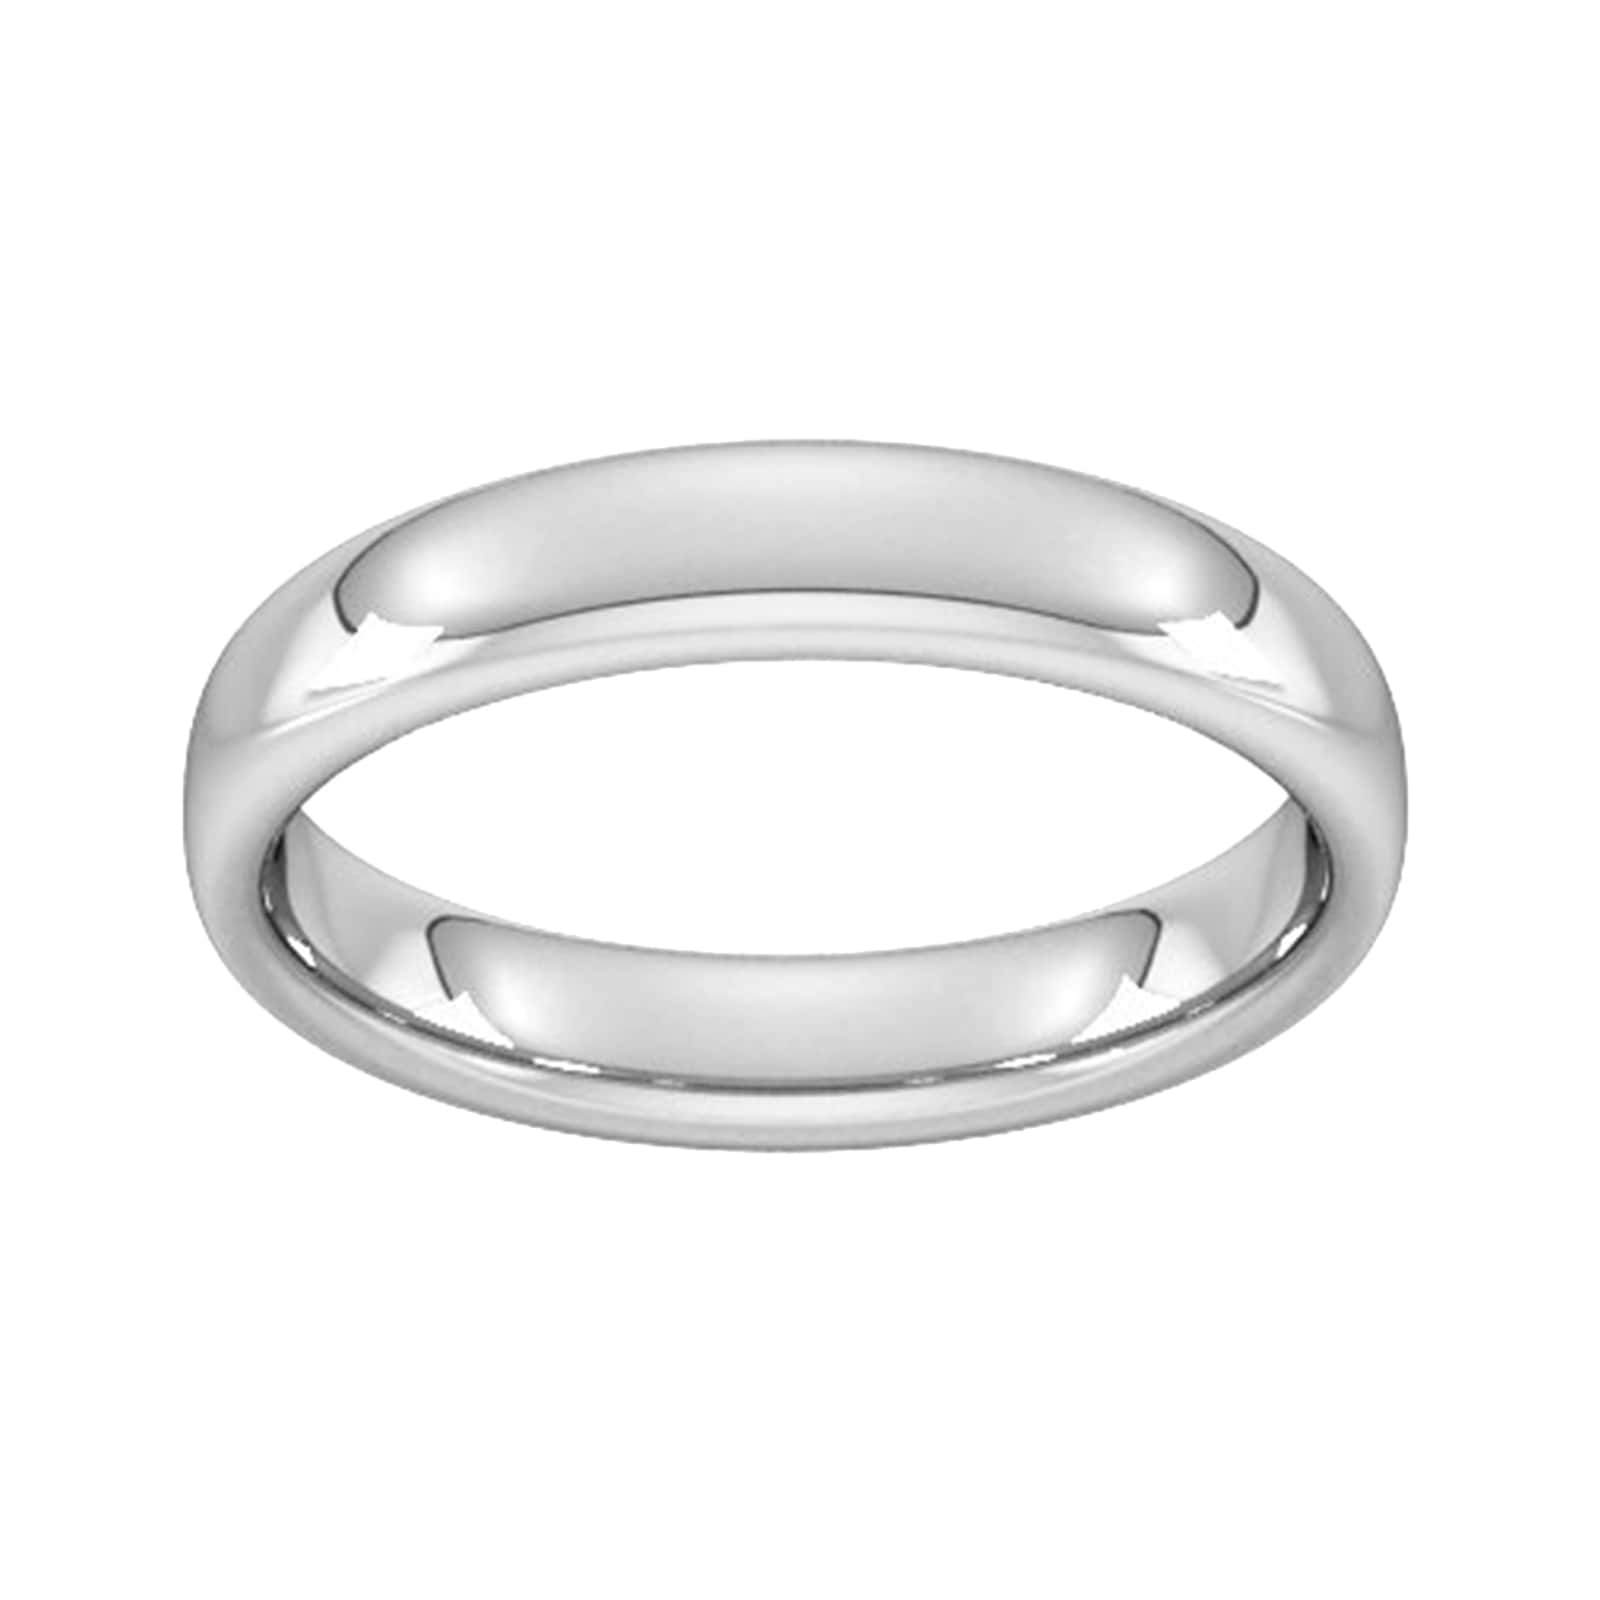 4mm Slight Court Heavy Wedding Ring In Sterling Silver - Ring Size U